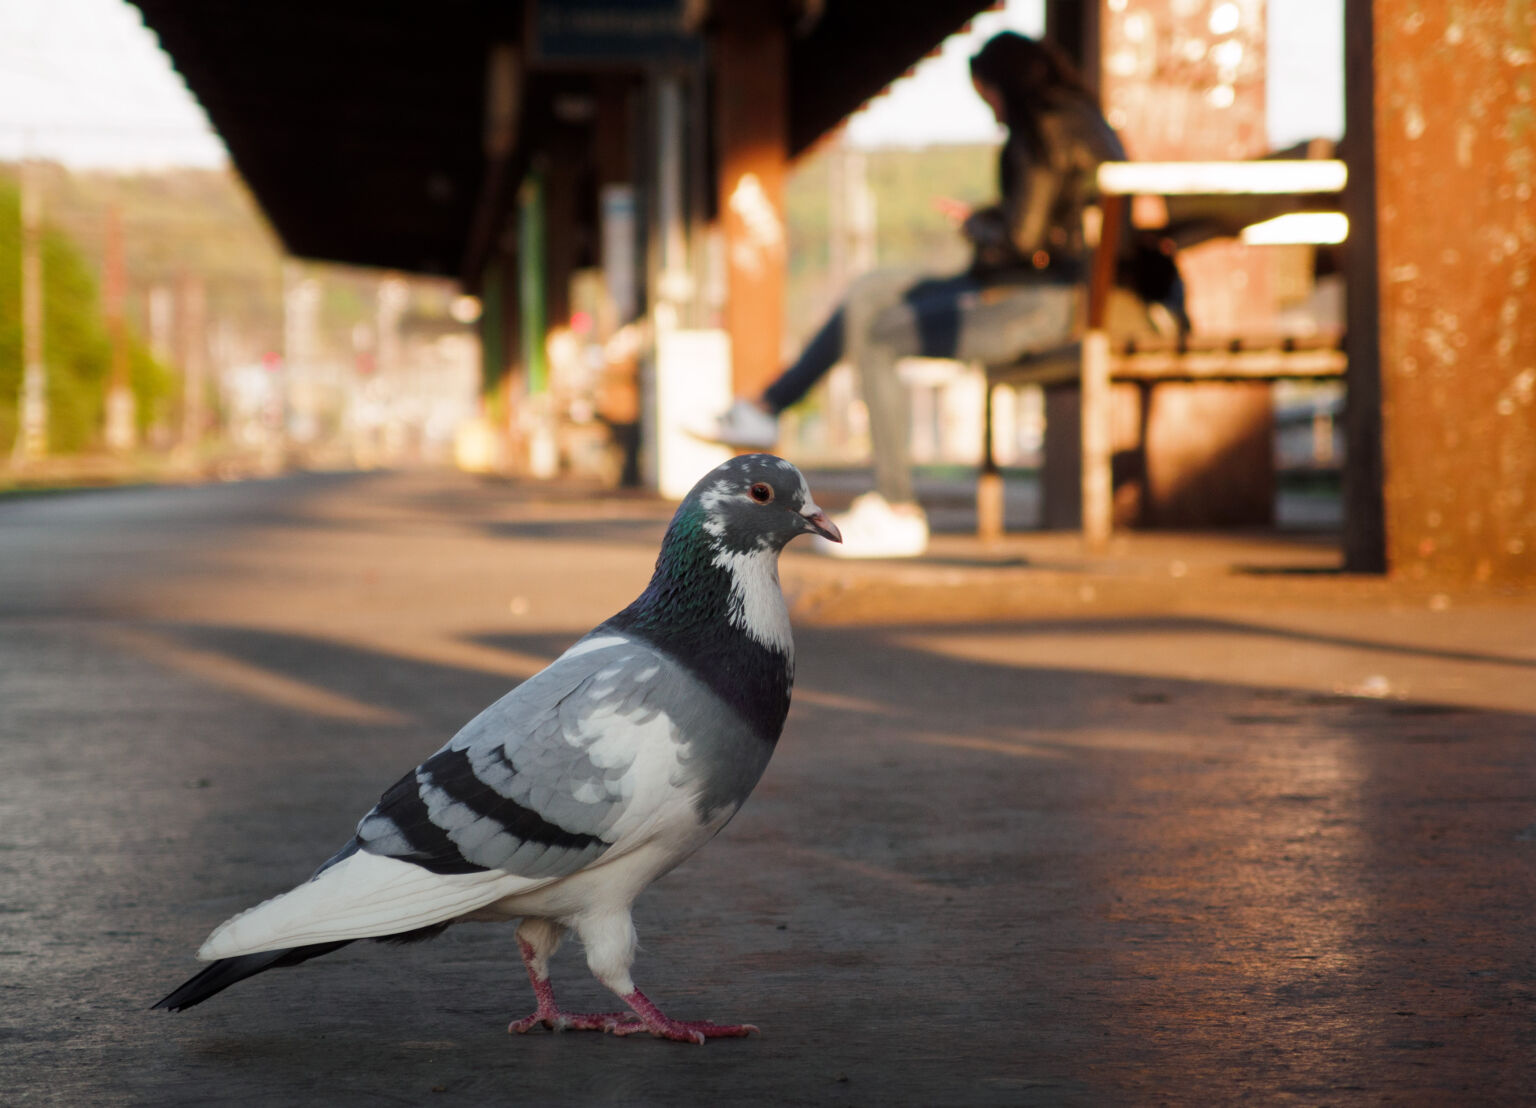 Pigeon on a train platform